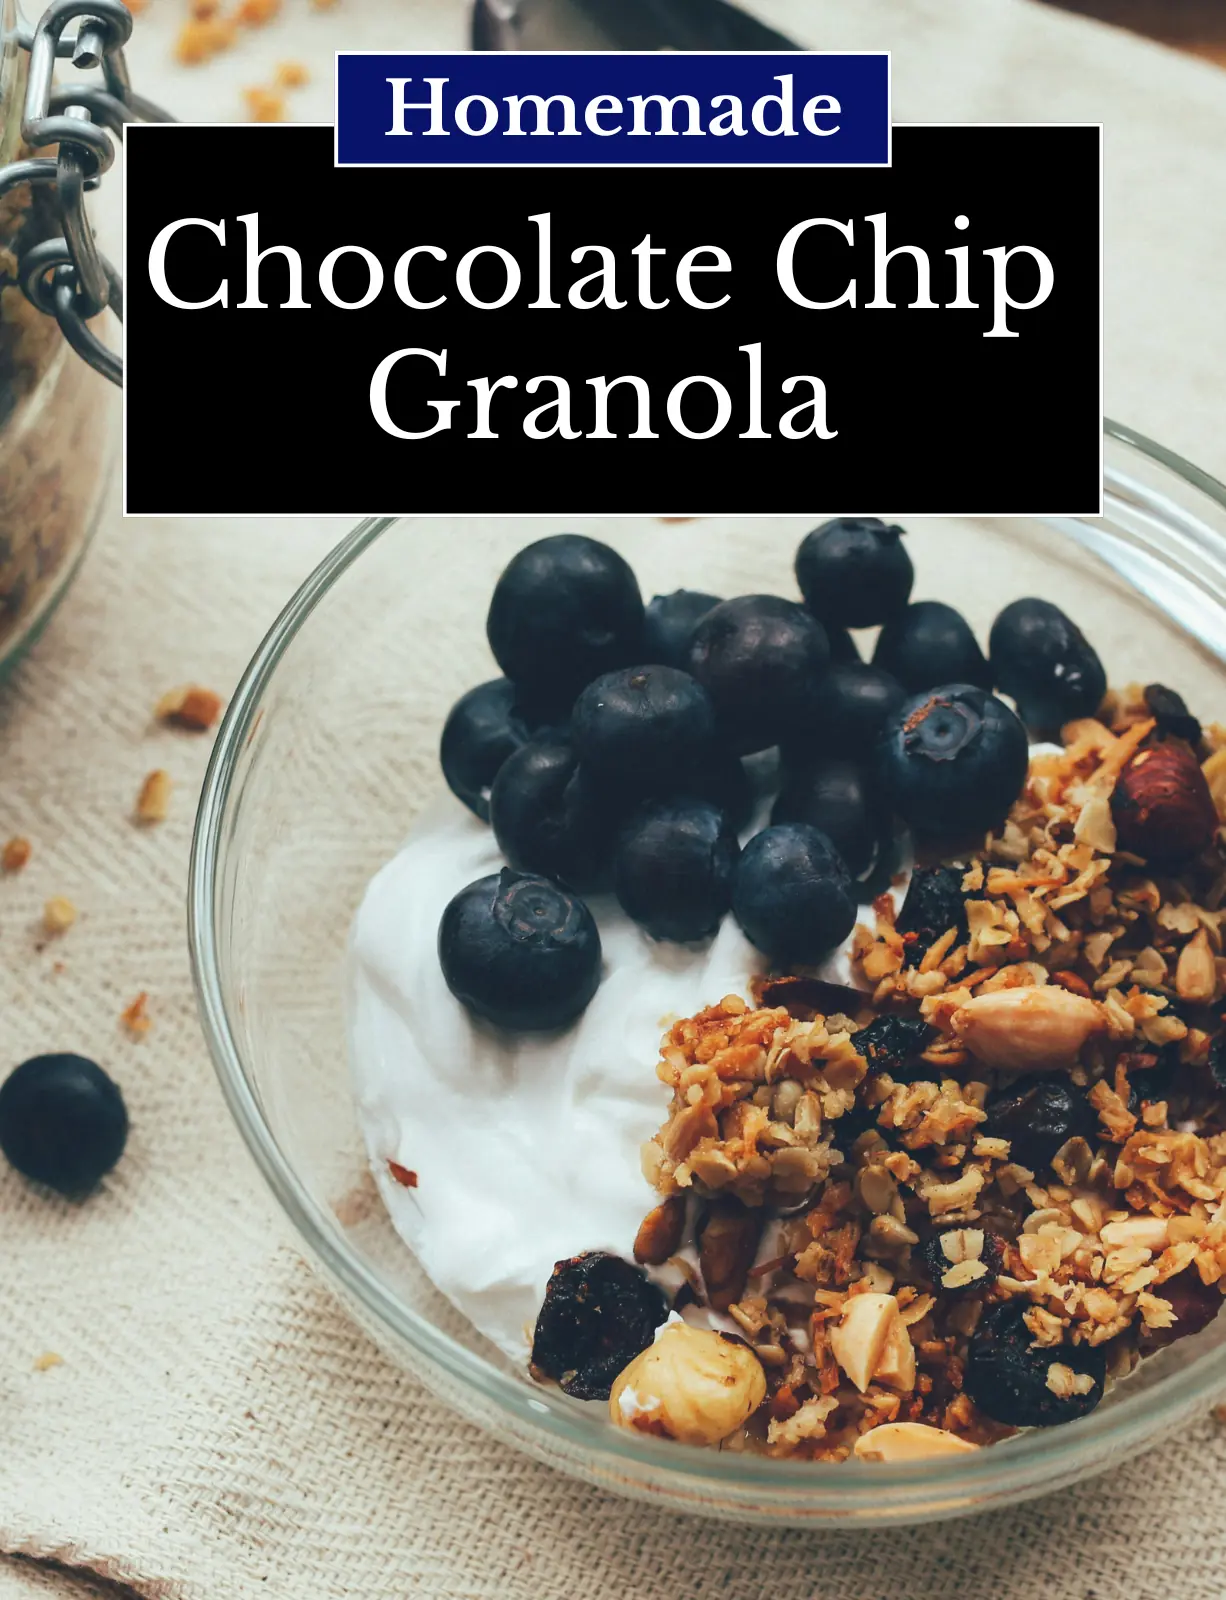 homemade chocolate chip granola, chocolate chip granola recipe, healthy granola recipe, chocolate granola recipe, granola, muesli, hazelnut granola, chocolate chip granola, dried fruit breakfast